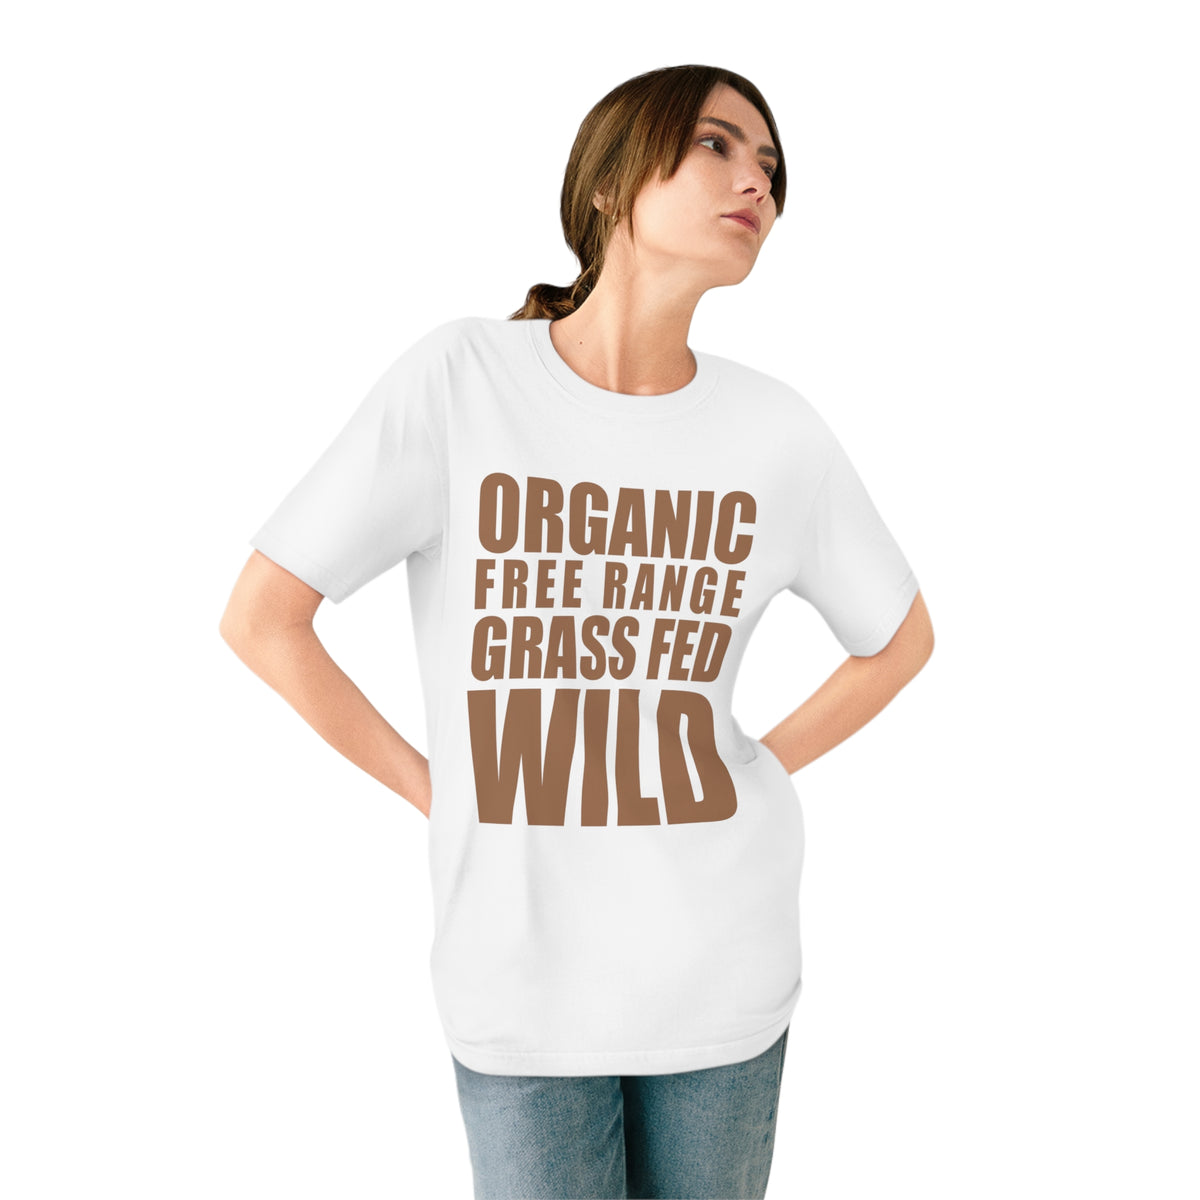 Organic, Free Range, Grass-fed & Wild (organic)